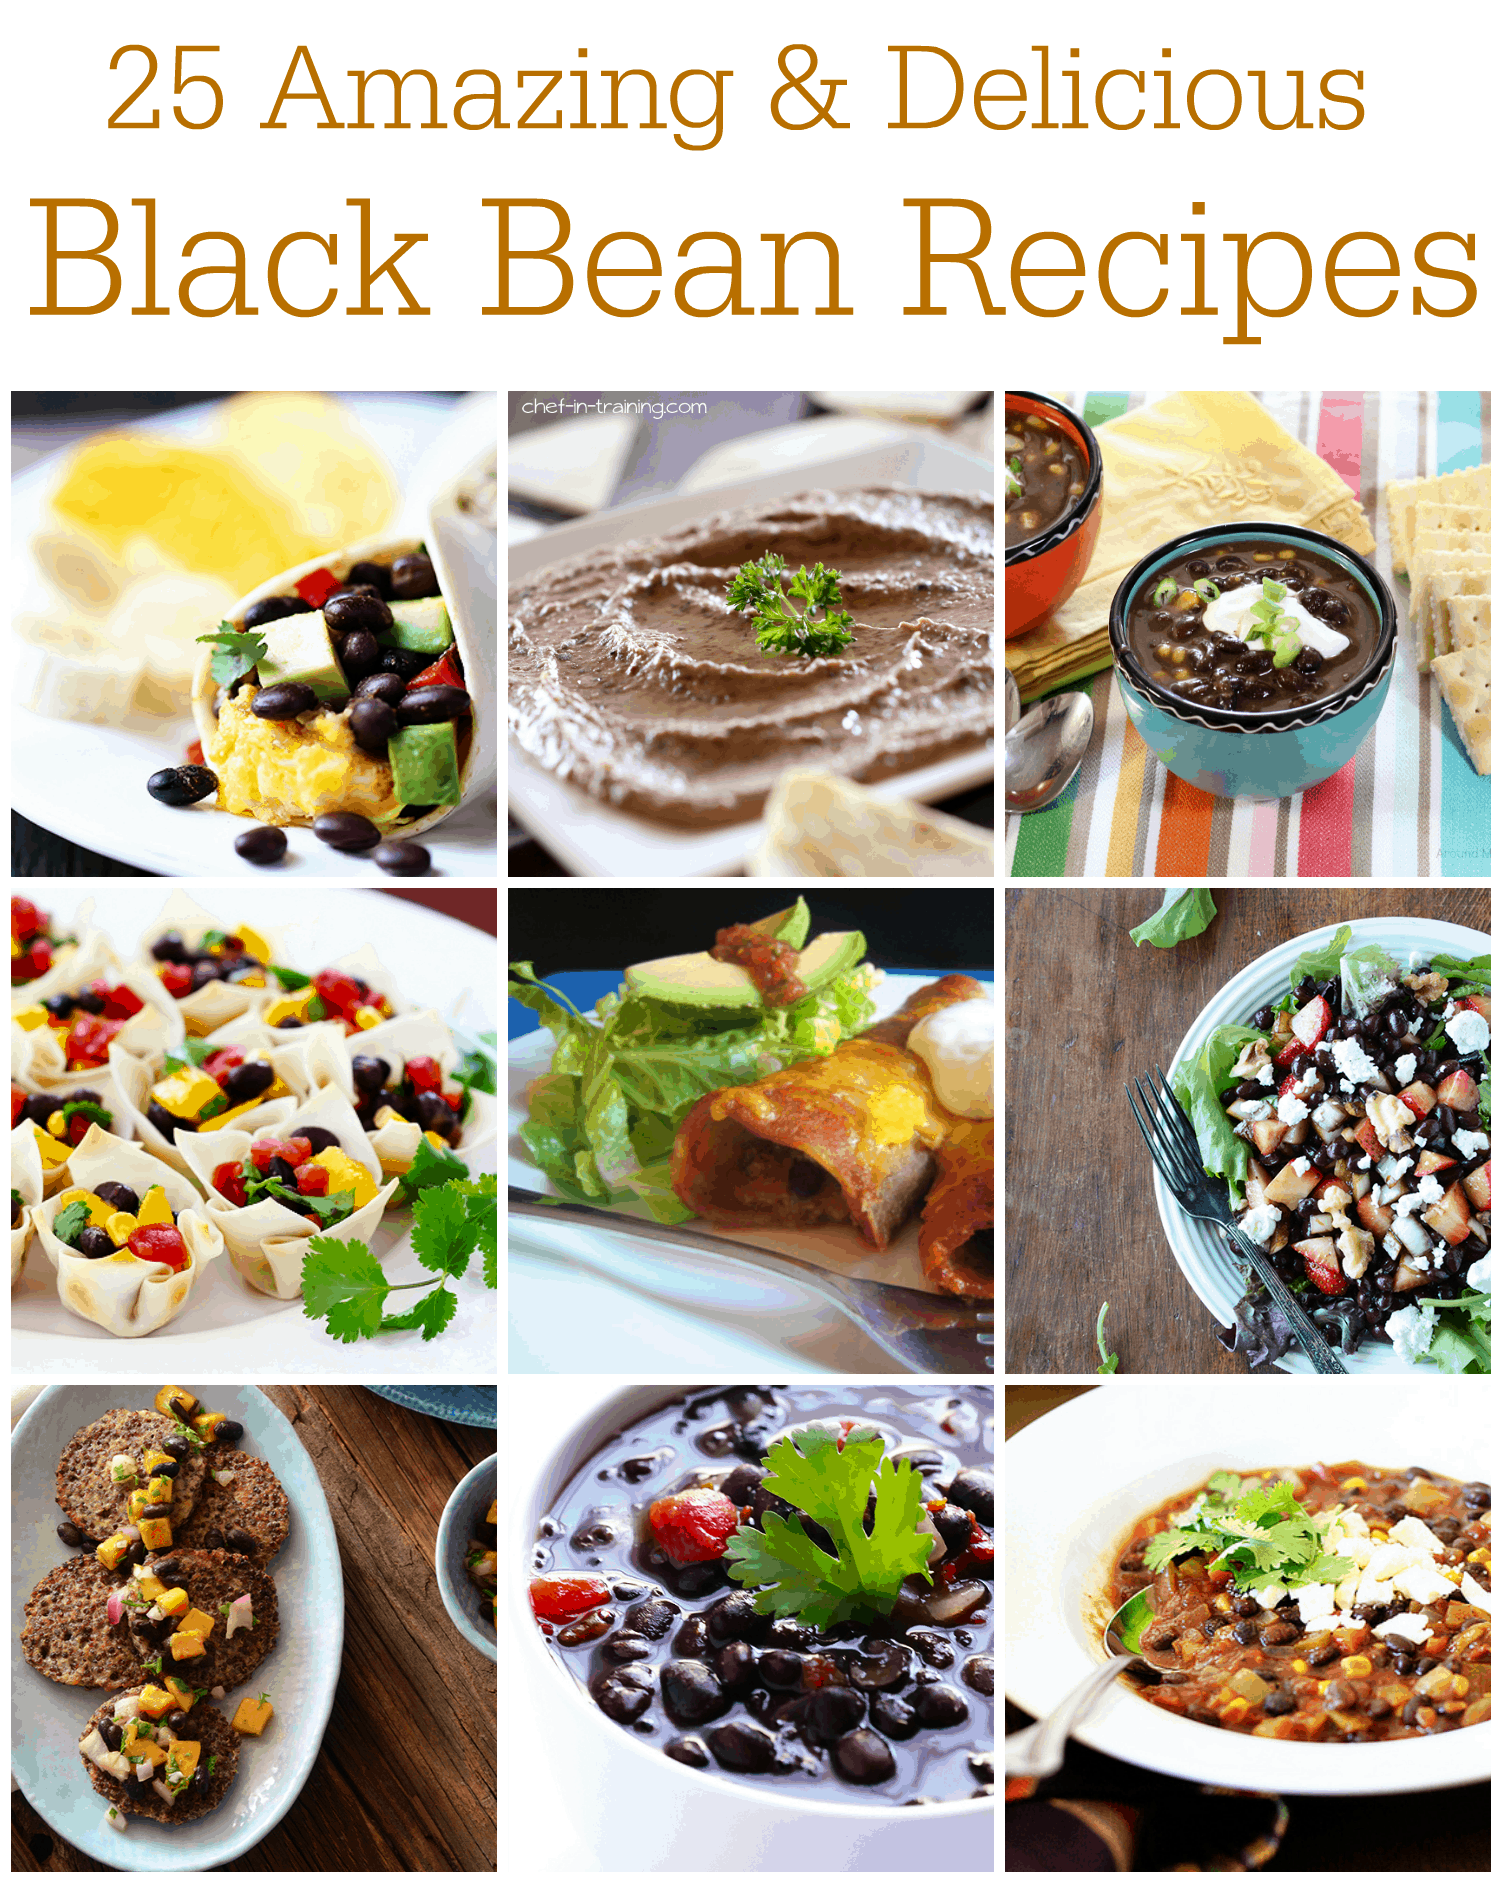 25 Amazing & Delicious Black Bean Recipes